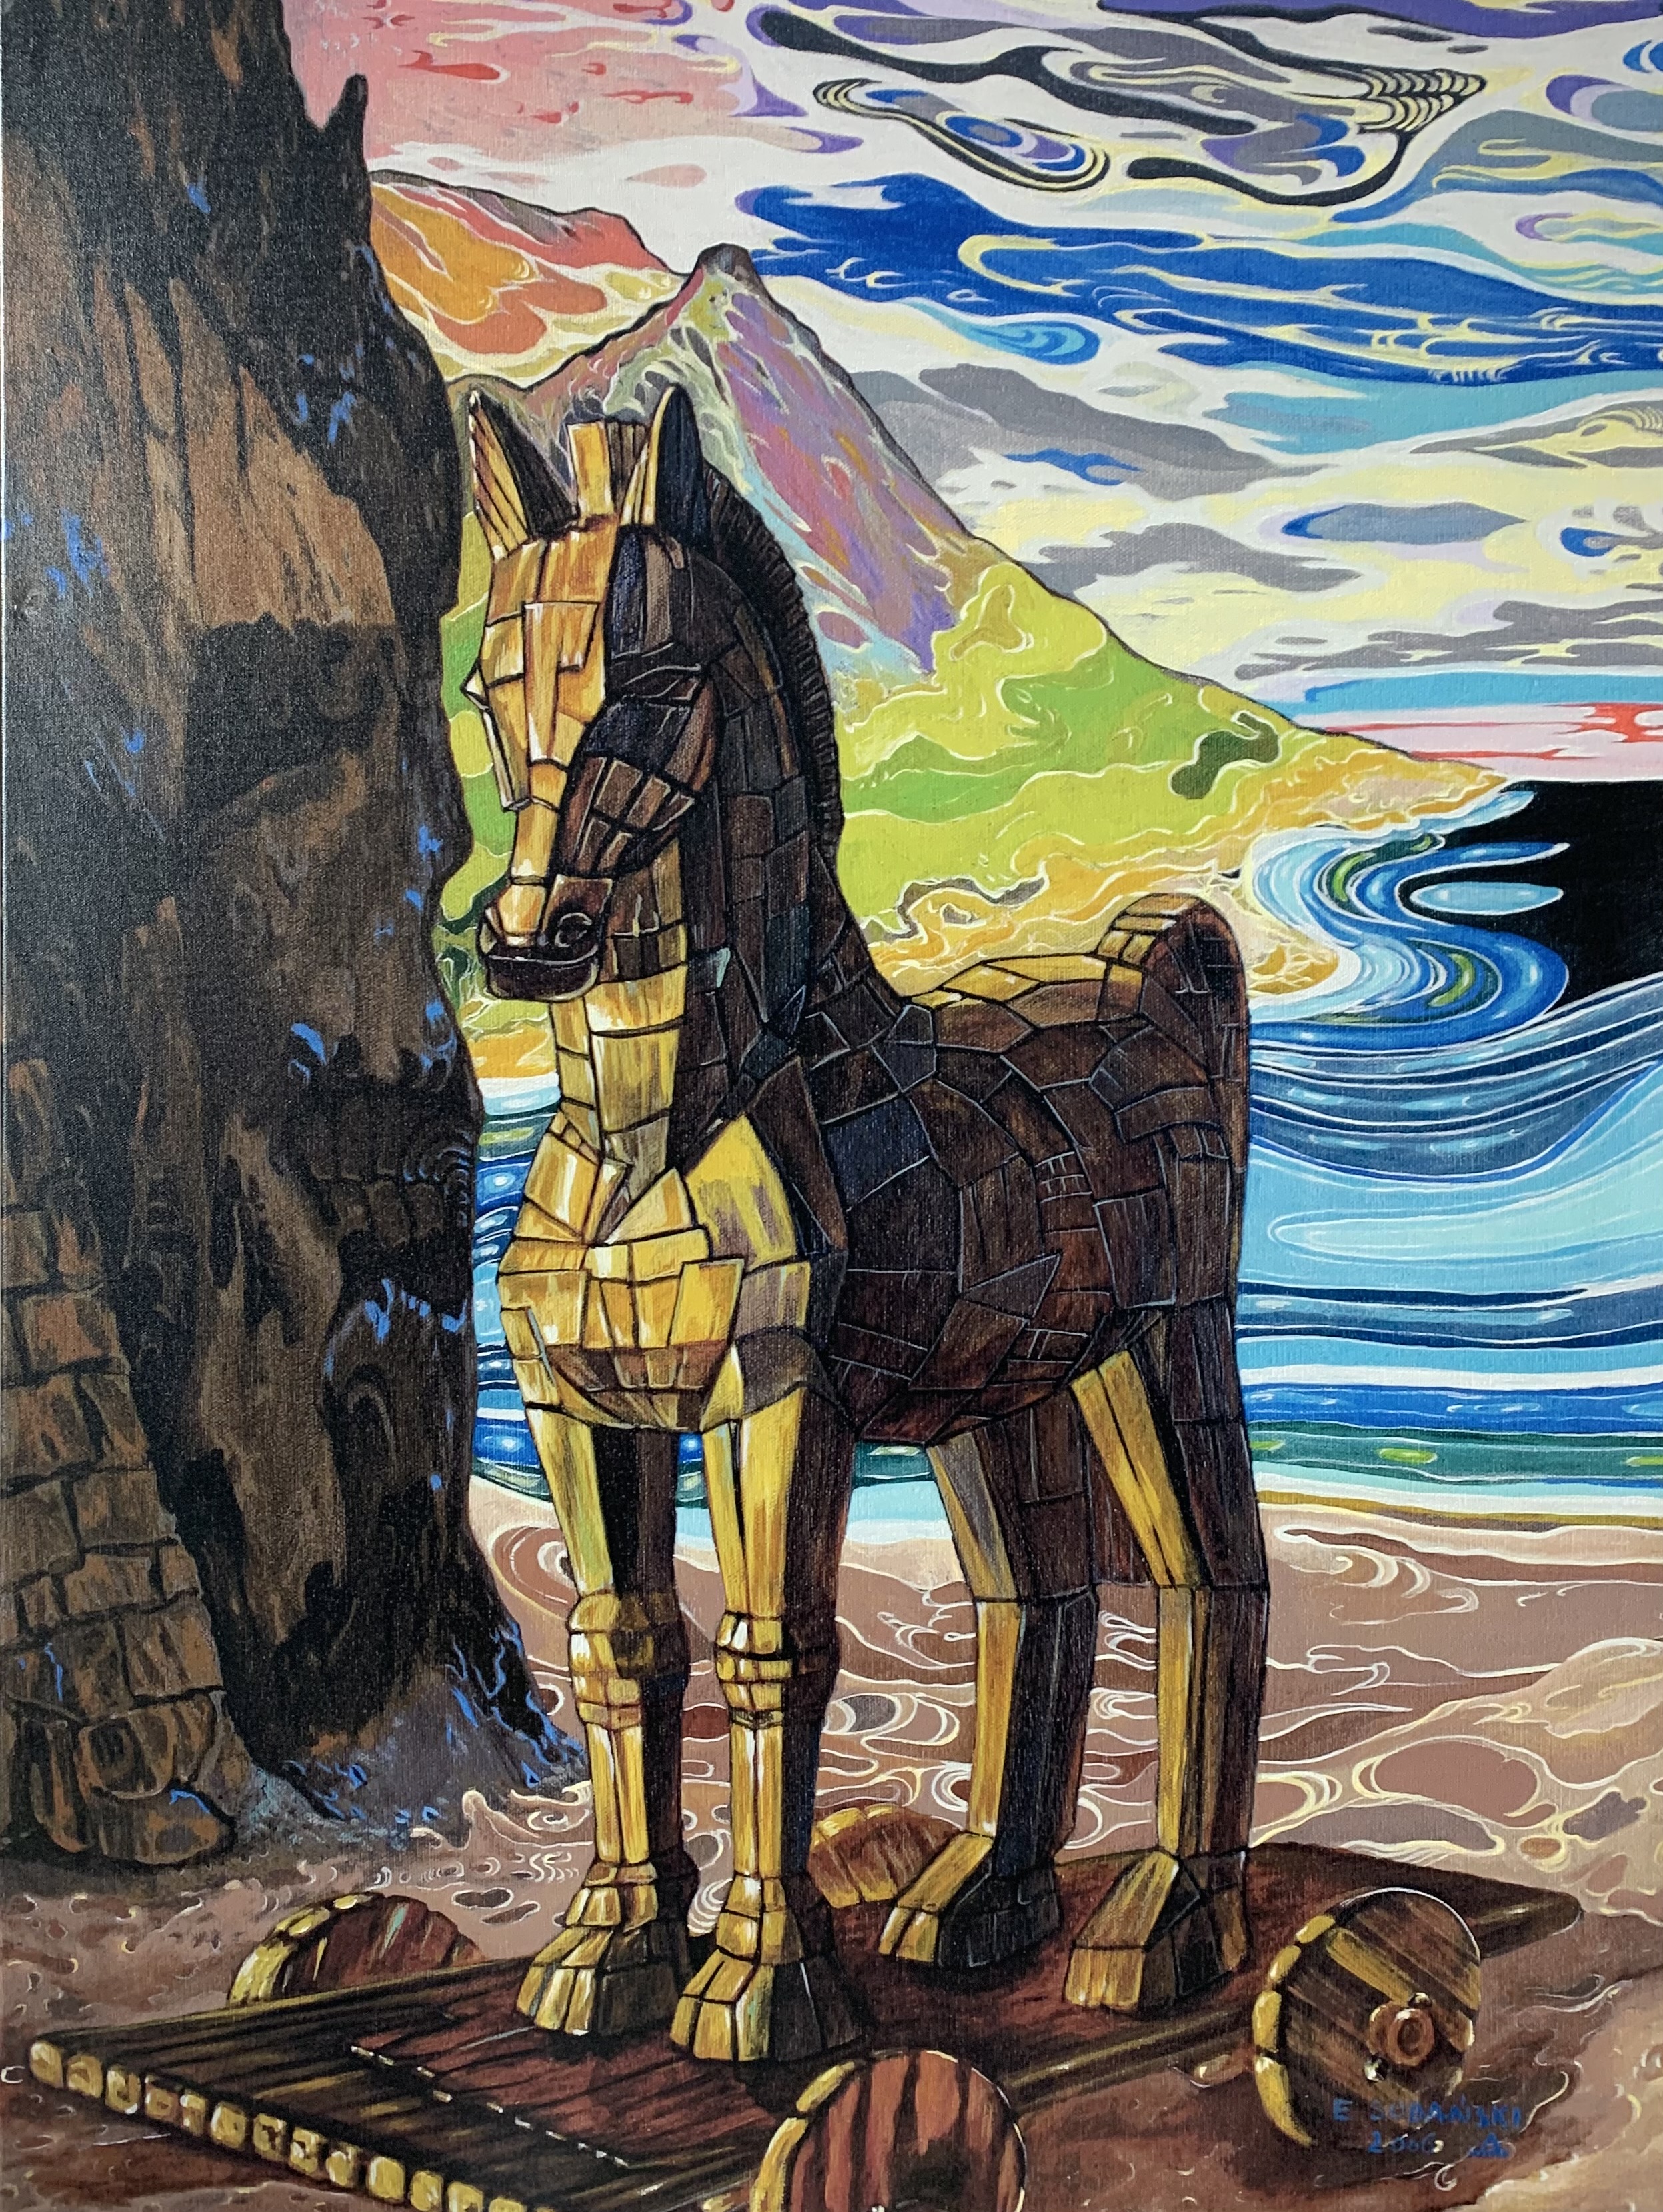 TROJAN'S HORSE (15" X 20" - CANVAS PRINT)